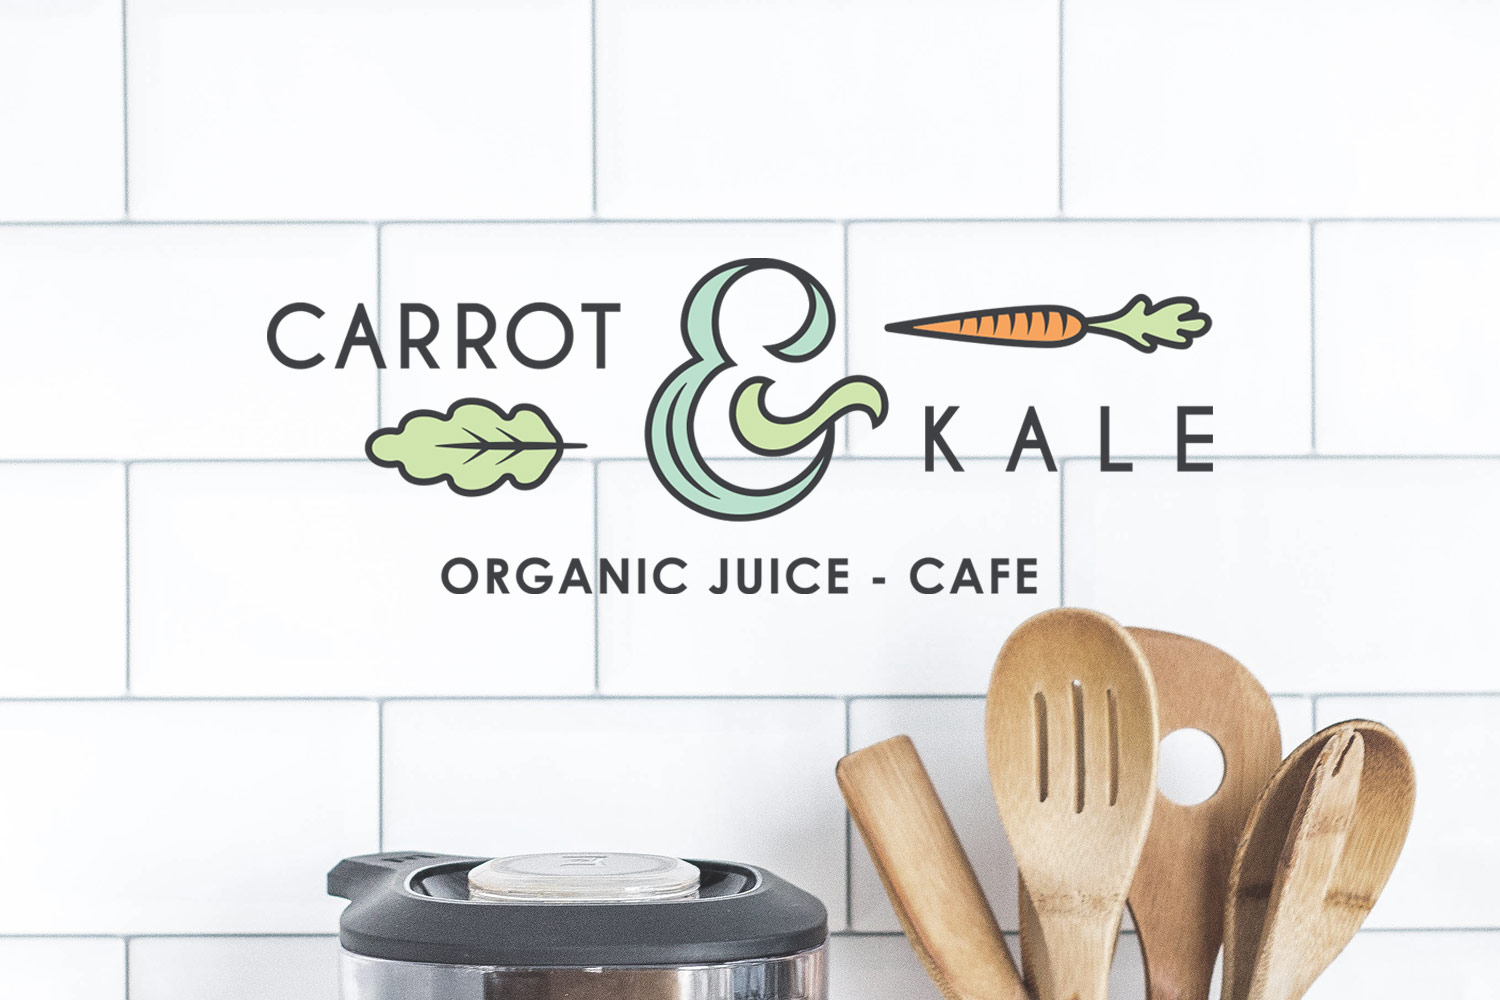 Carrot & Kale - Organic Juice - Cafe logo